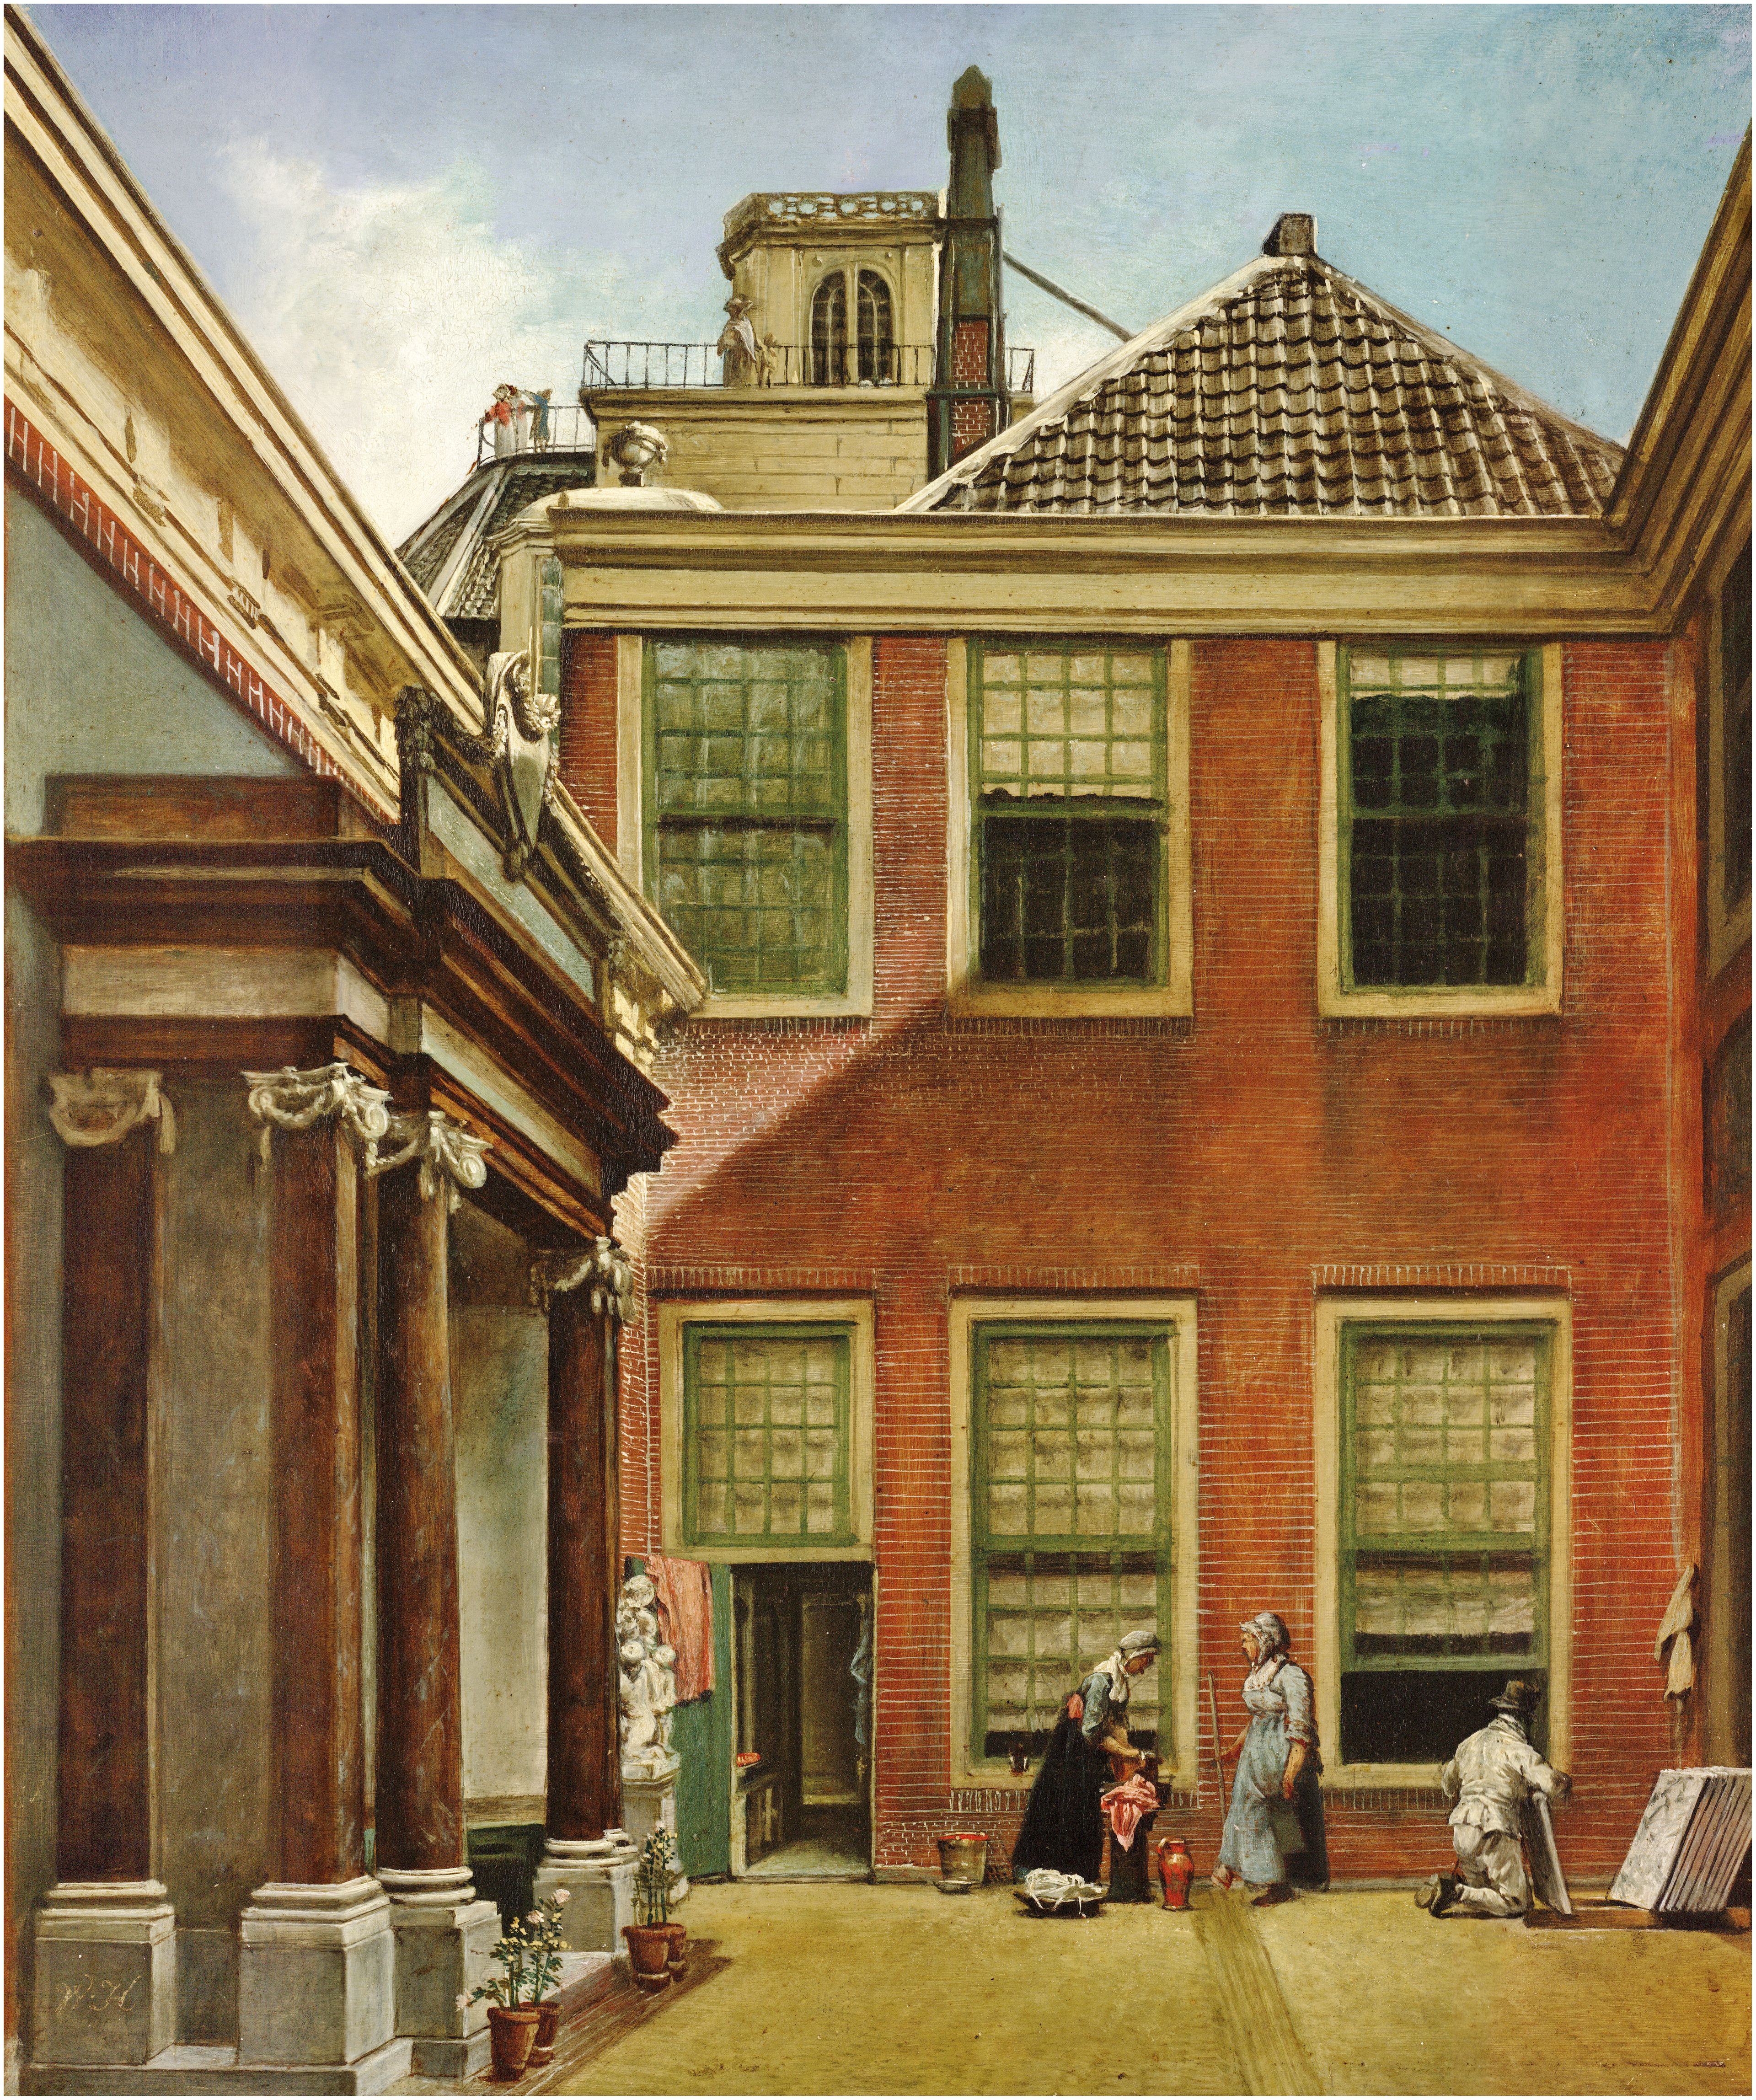 Wybrand Hendriks, 'The courtyard of The Pieter Teyler House', ca. 1800-1820.